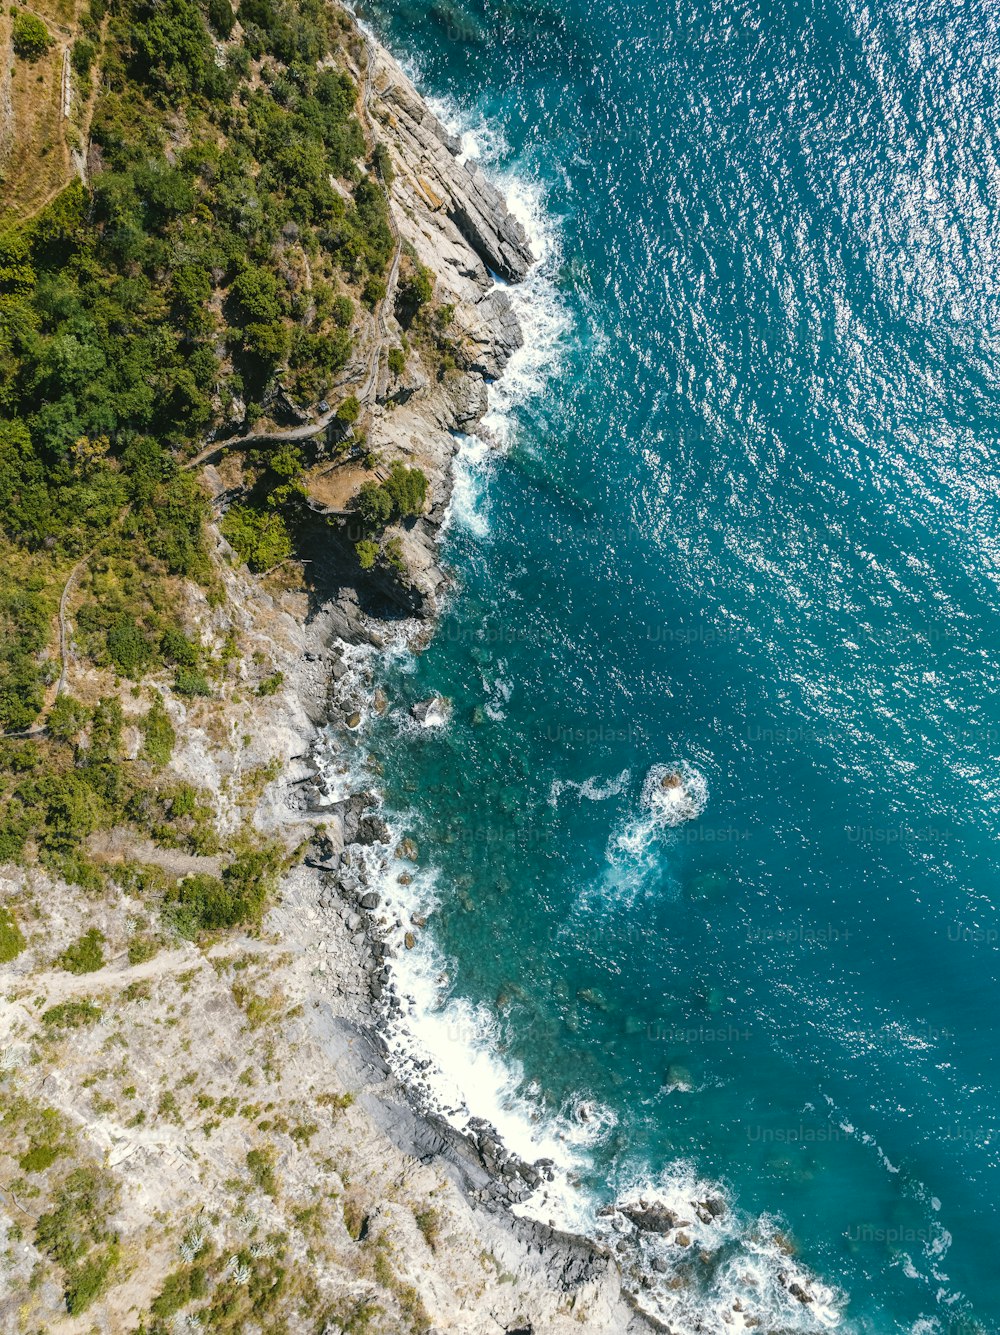 a bird's eye view of the ocean and cliffs